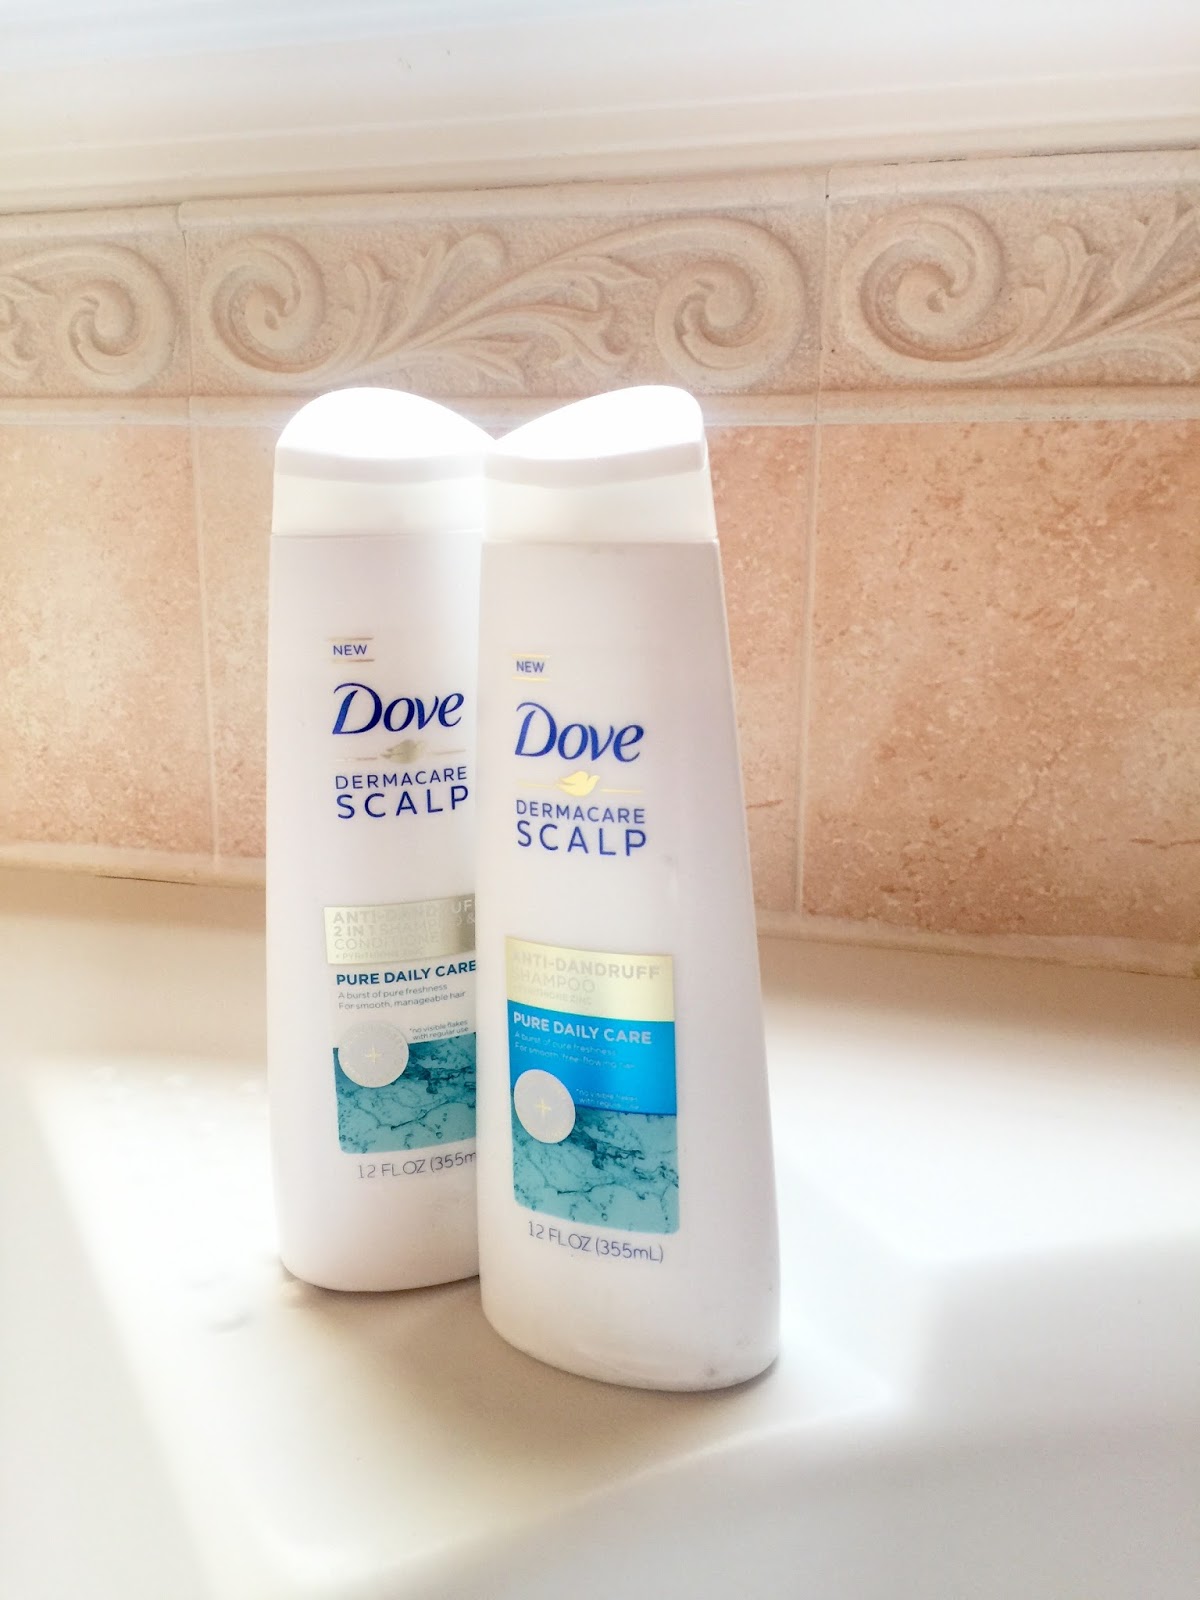 Dove DermaCare Scalp Shampoo, www.jadore-fashion.com